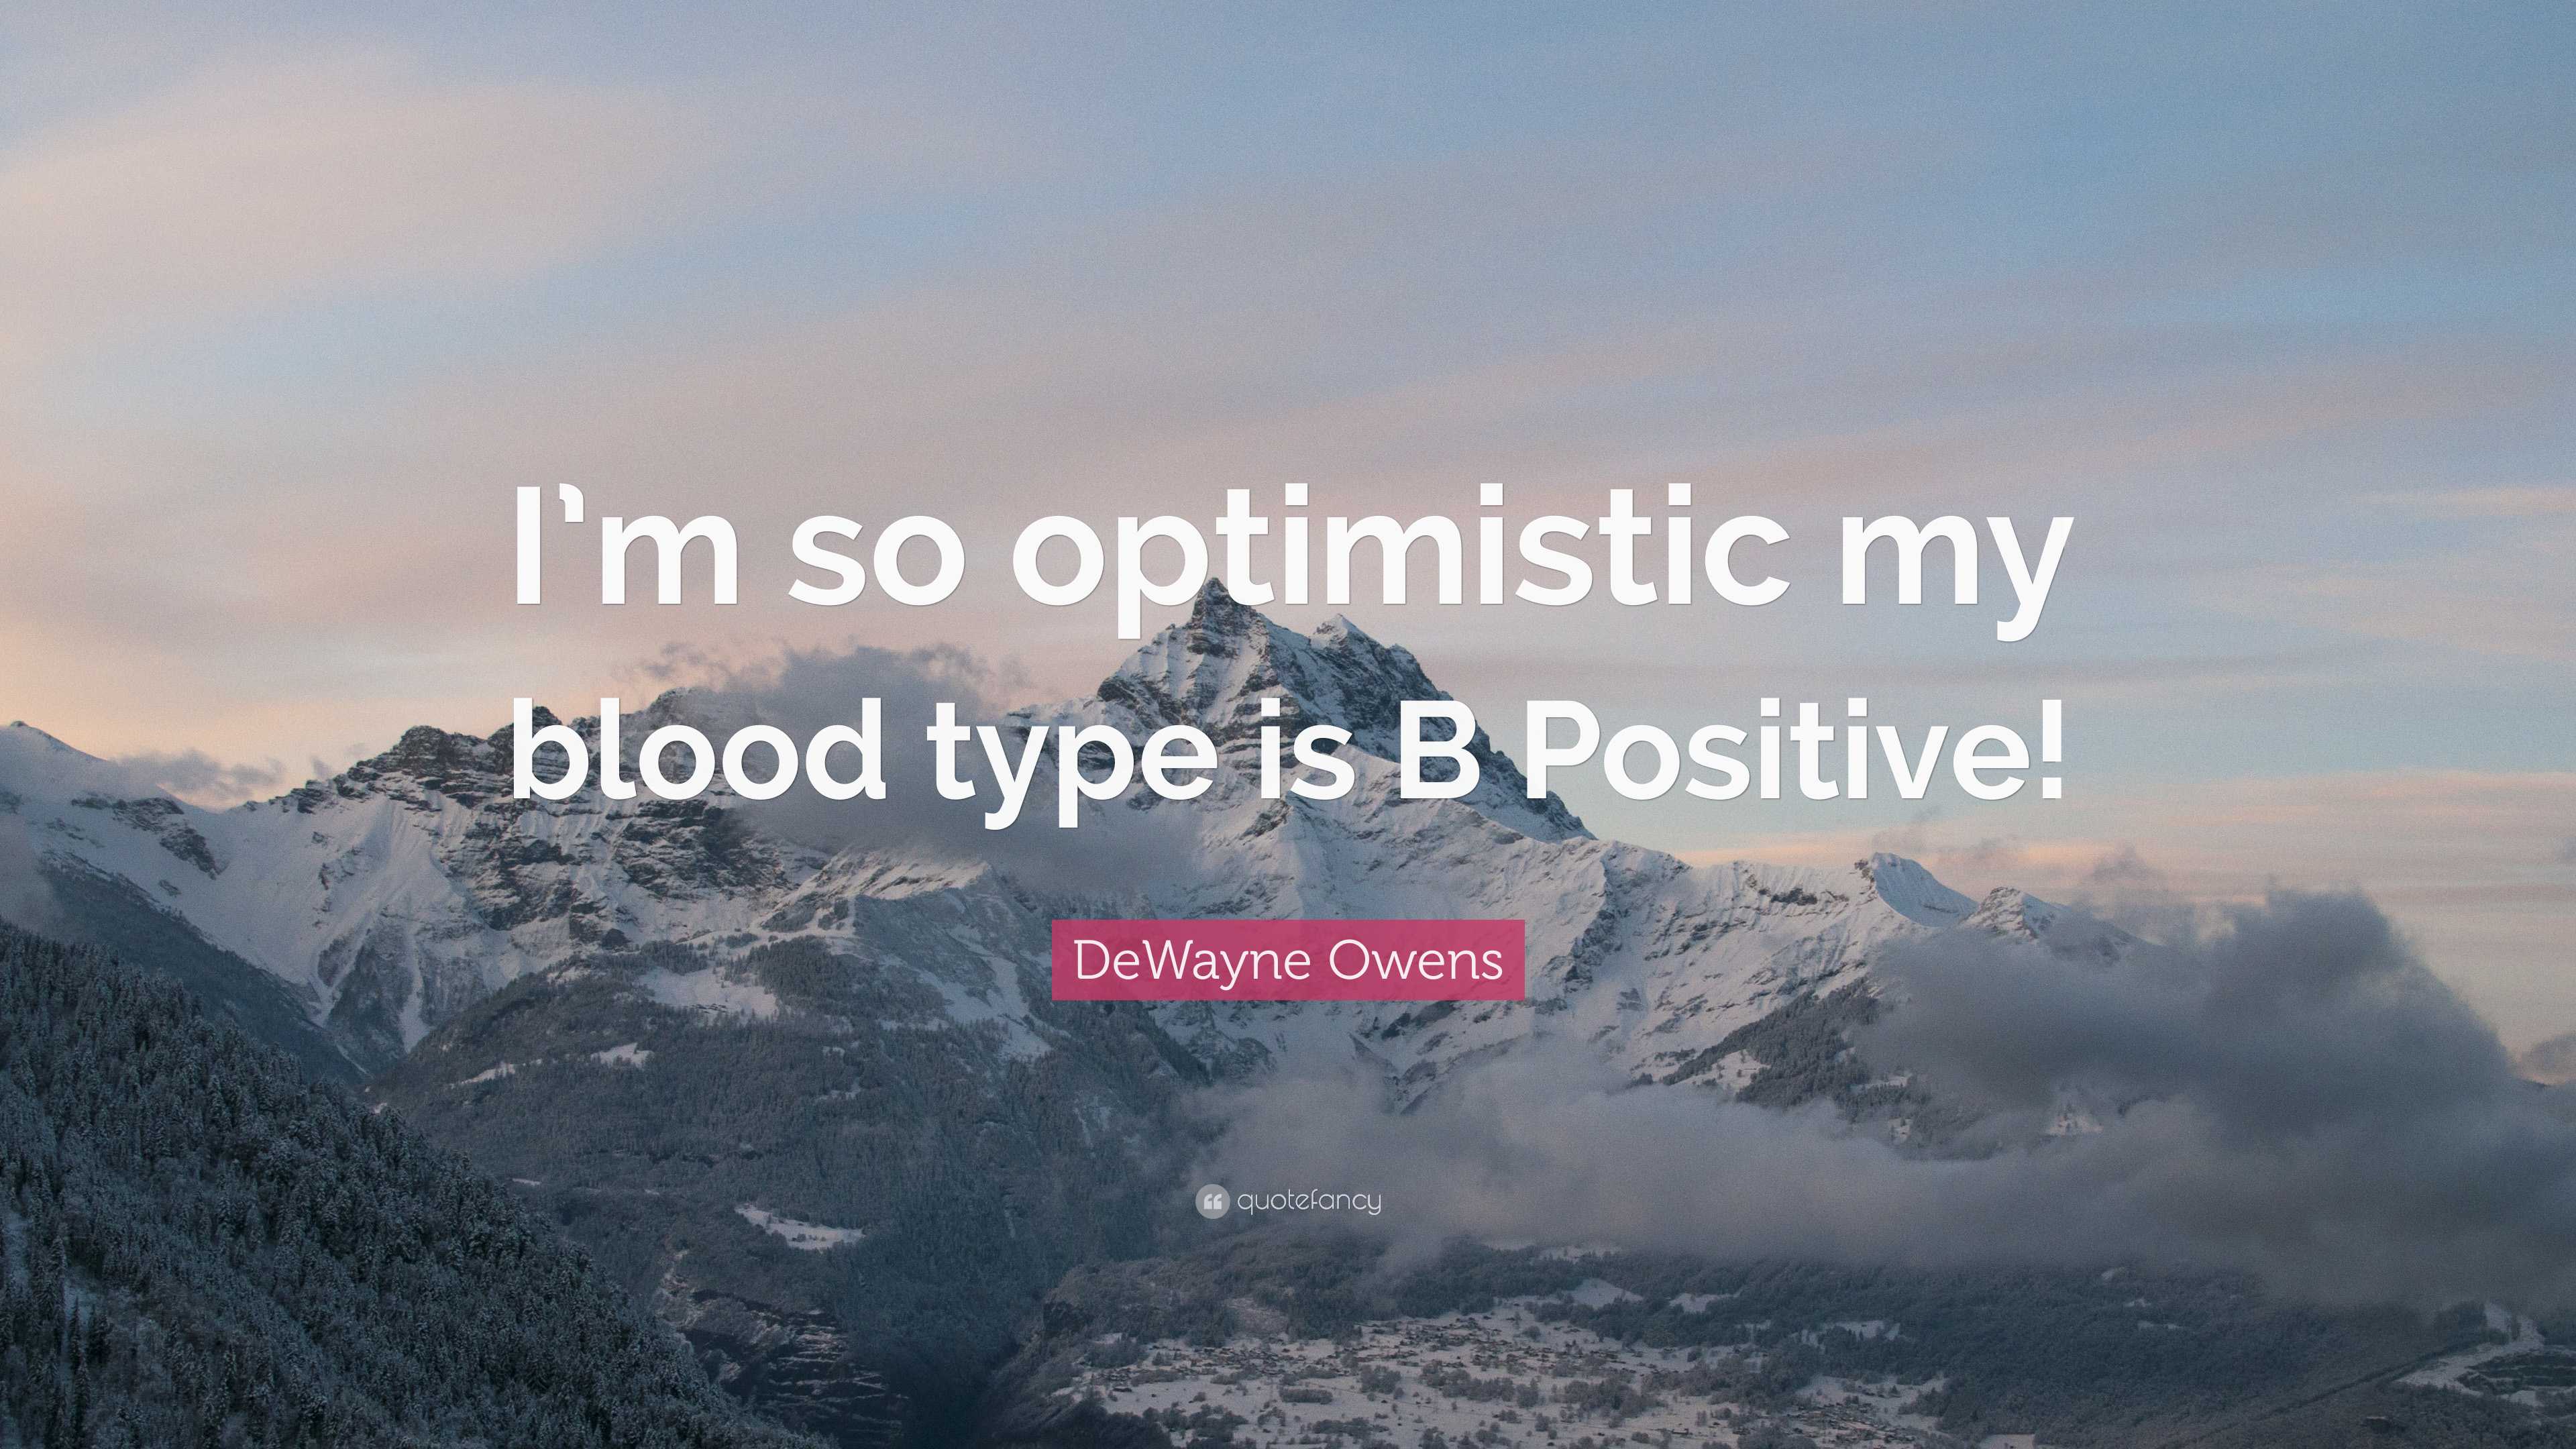 DeWayne Owens Quote: “I'm so optimistic my blood type is B Positive!”